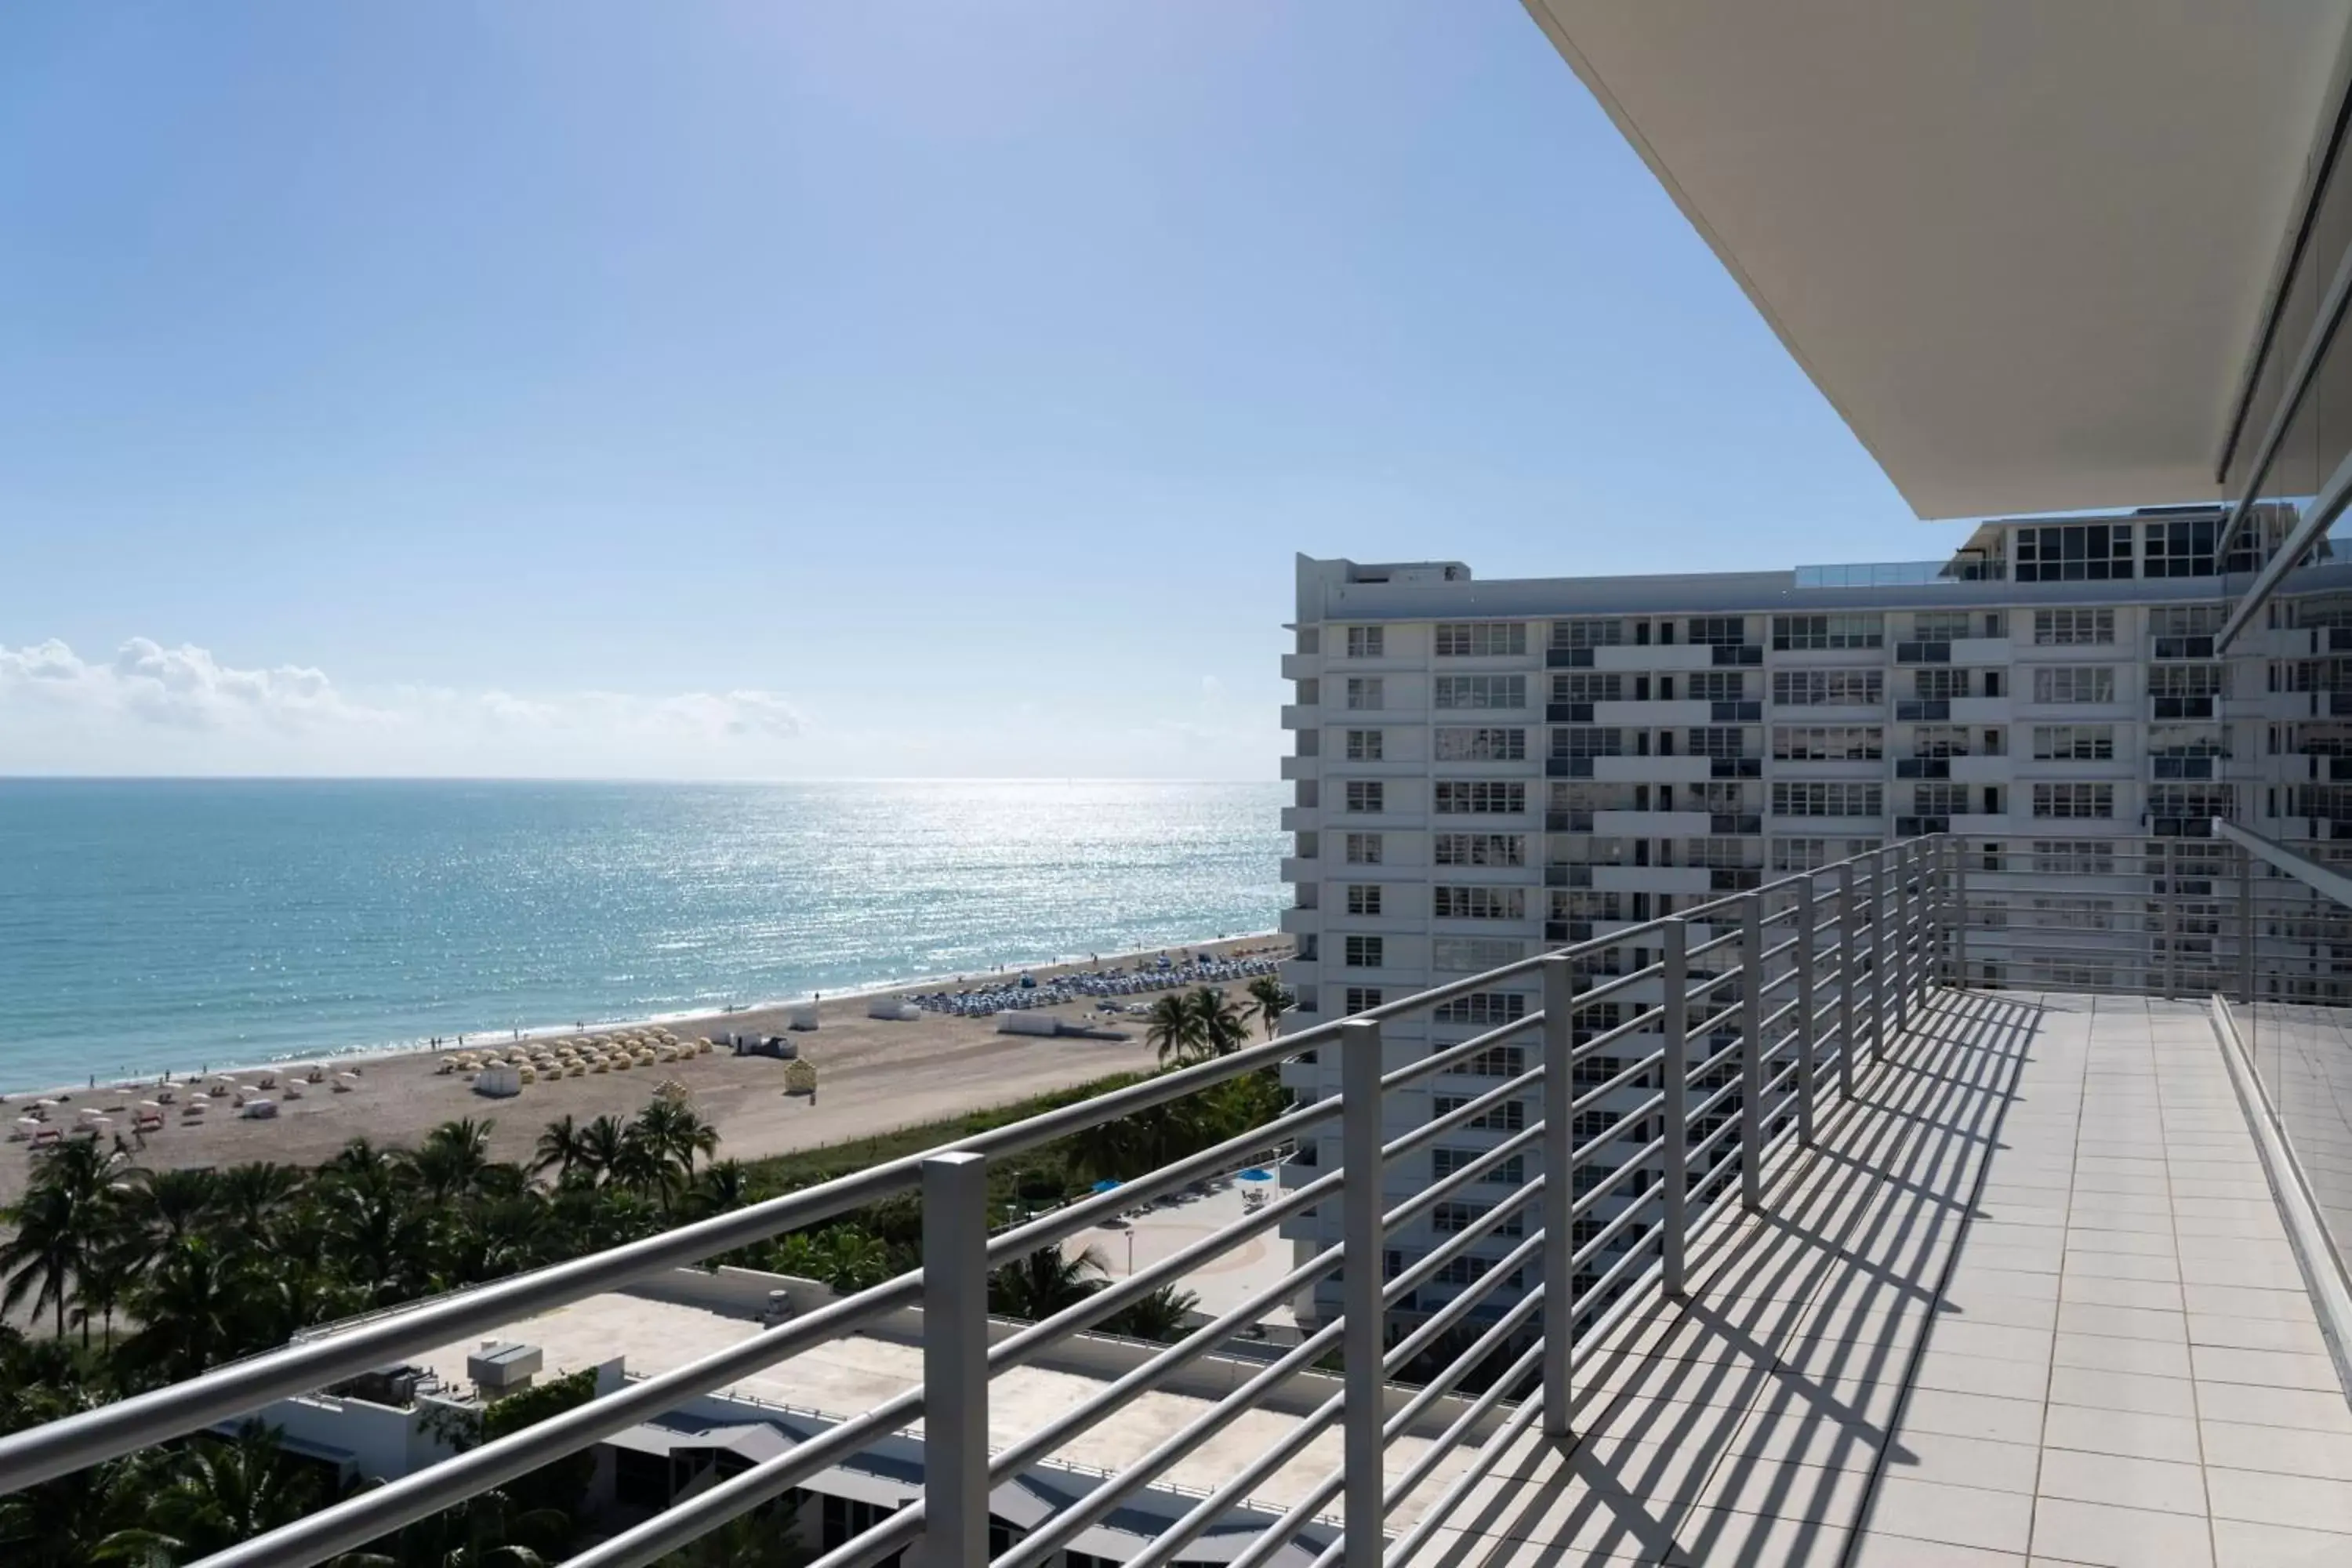 Photo of the whole room, Balcony/Terrace in The Ritz-Carlton South Beach